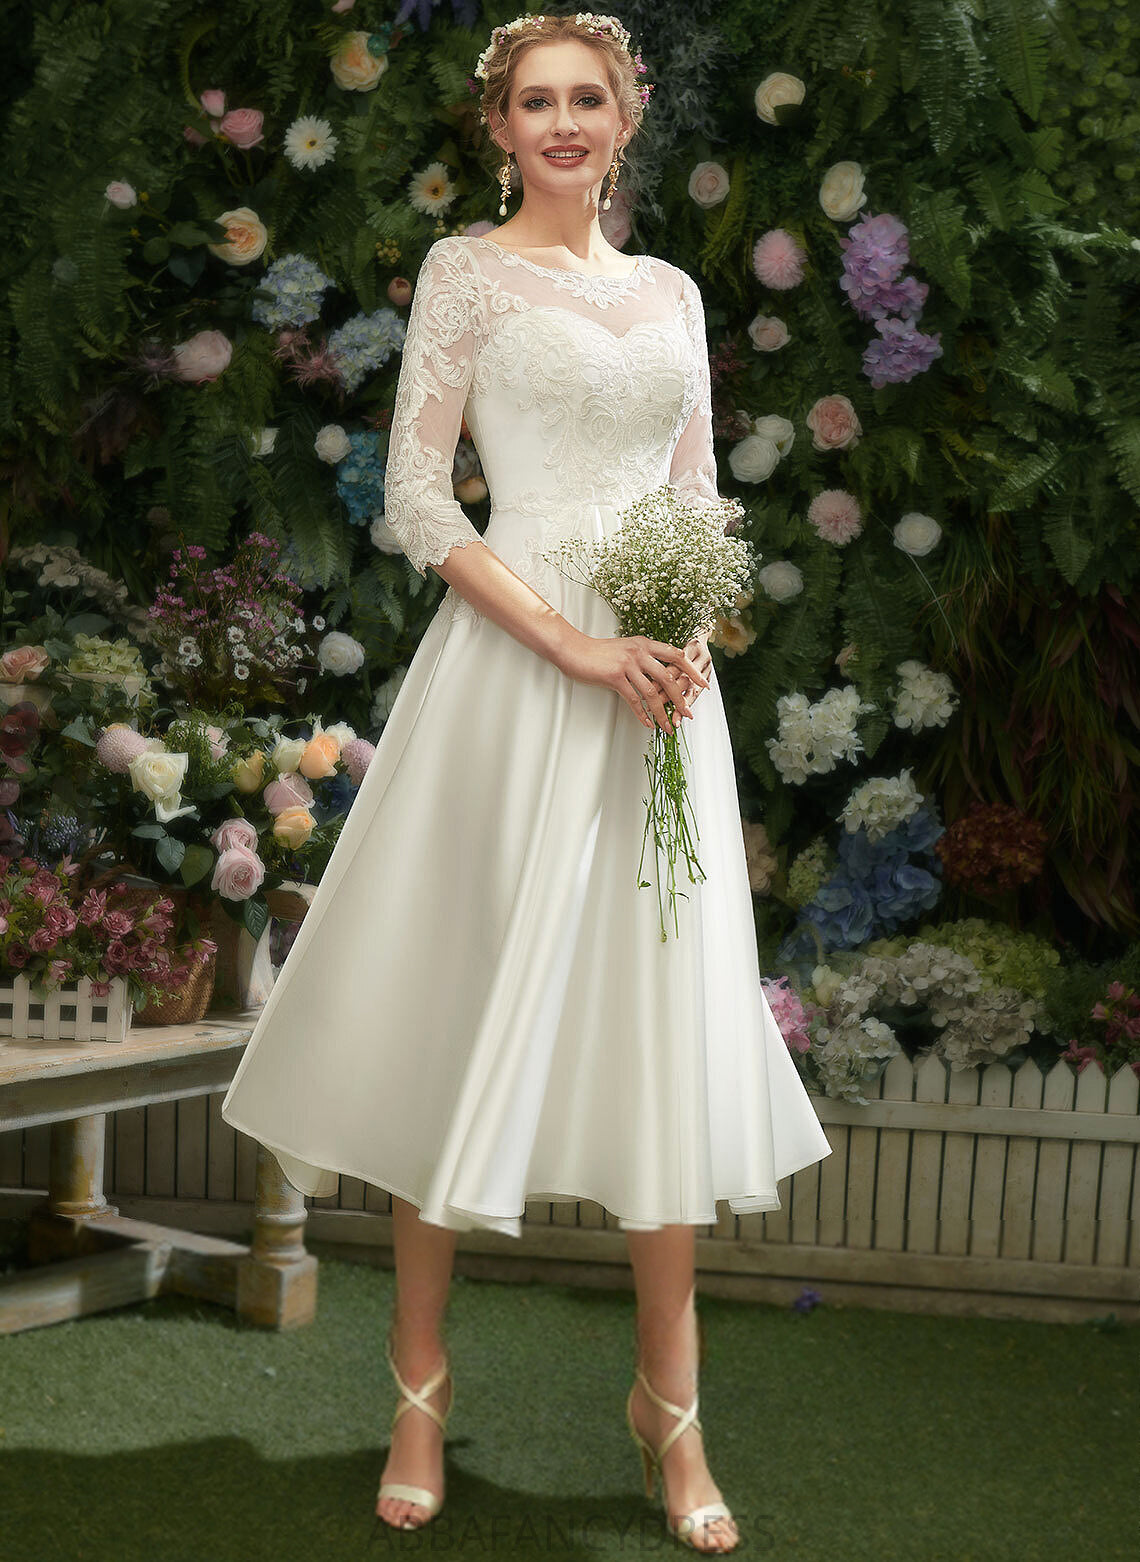 Lace Illusion A-Line Dress Wedding Wedding Dresses Tea-Length Giovanna Satin